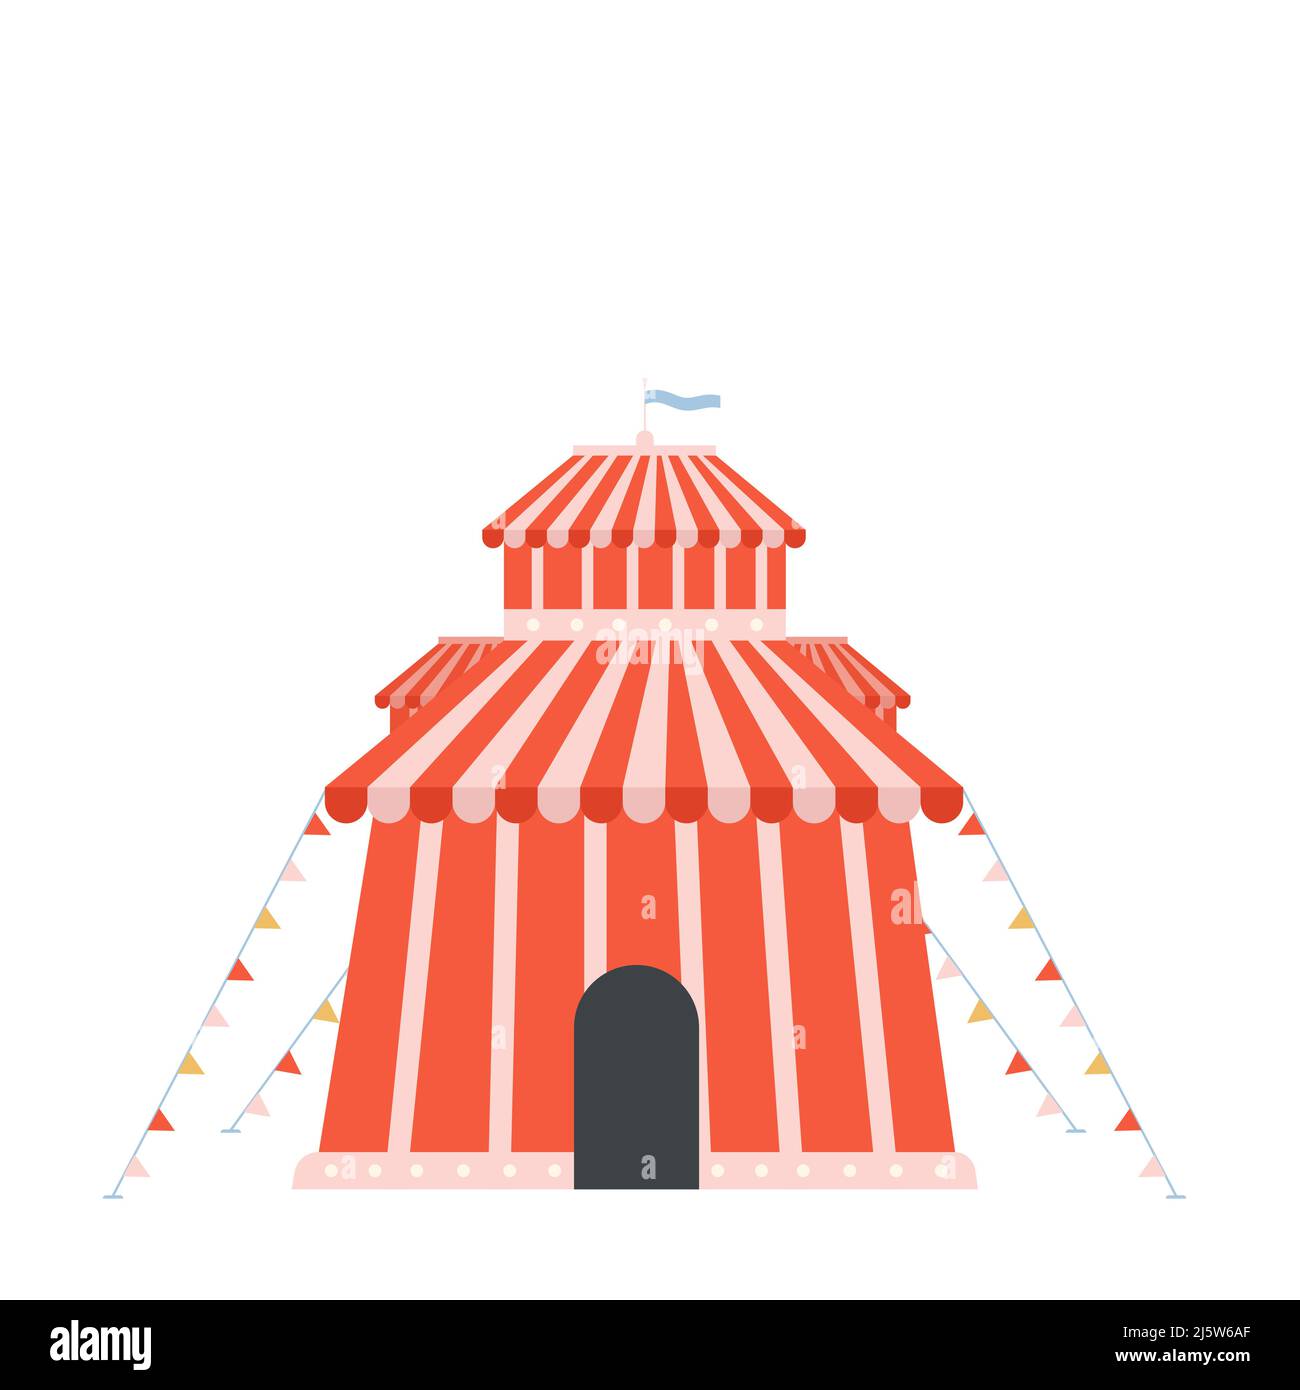 Entertainment amusement circus tent. Magical wizard festival event arena vector illustration Stock Vector